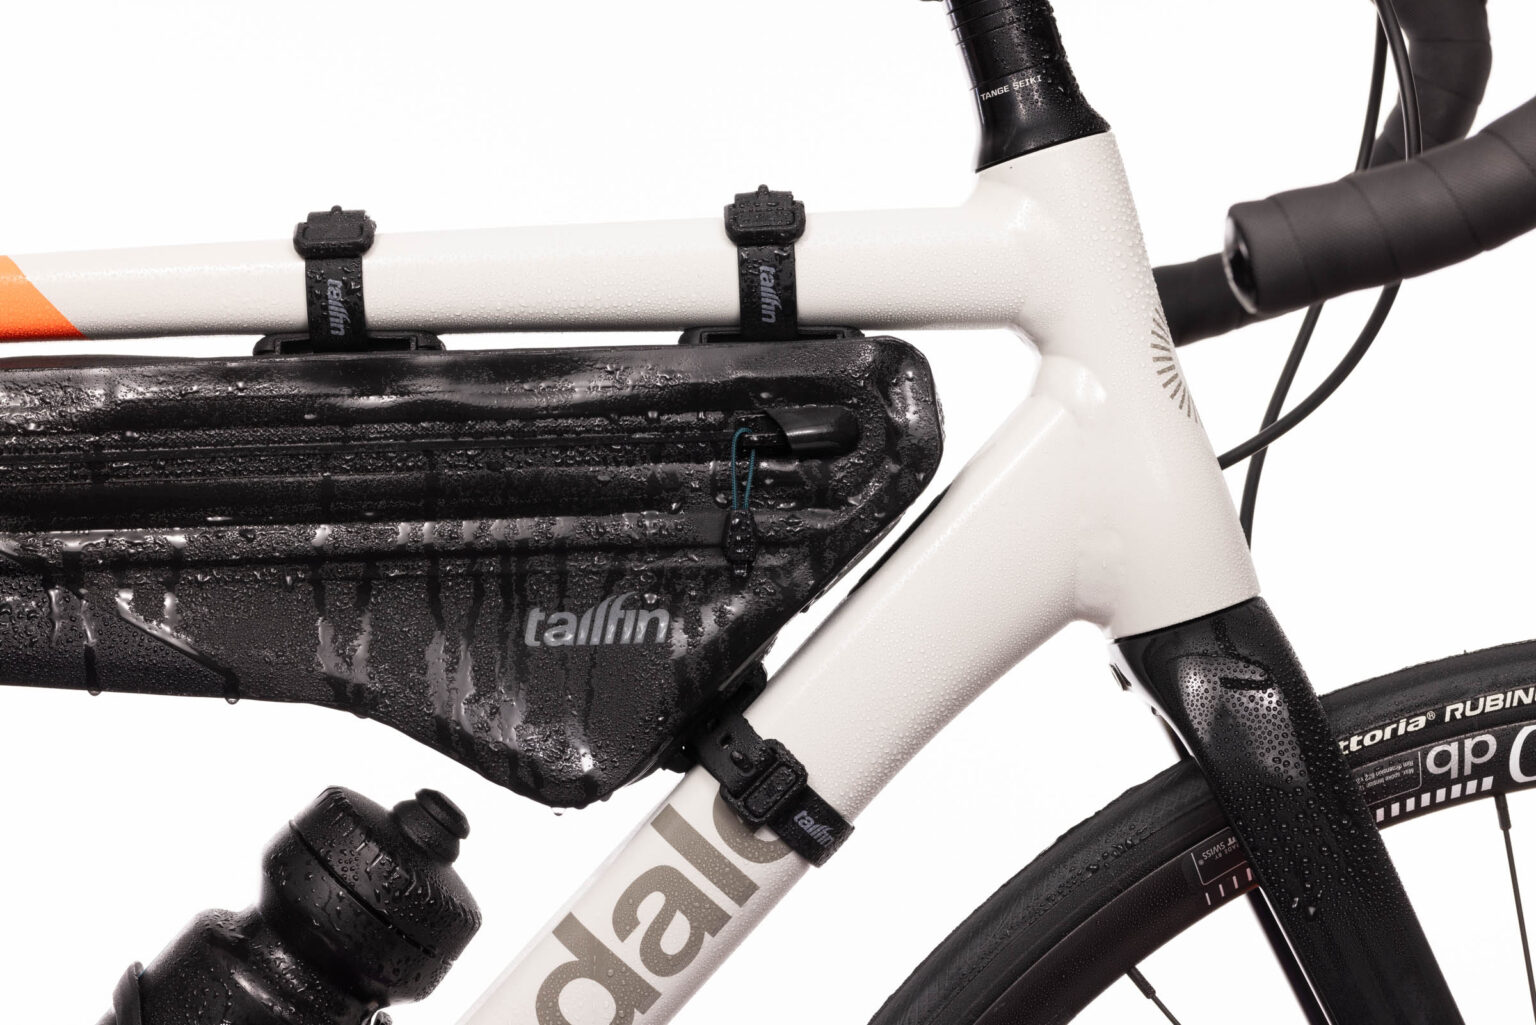 Tailfin frame bag on bike